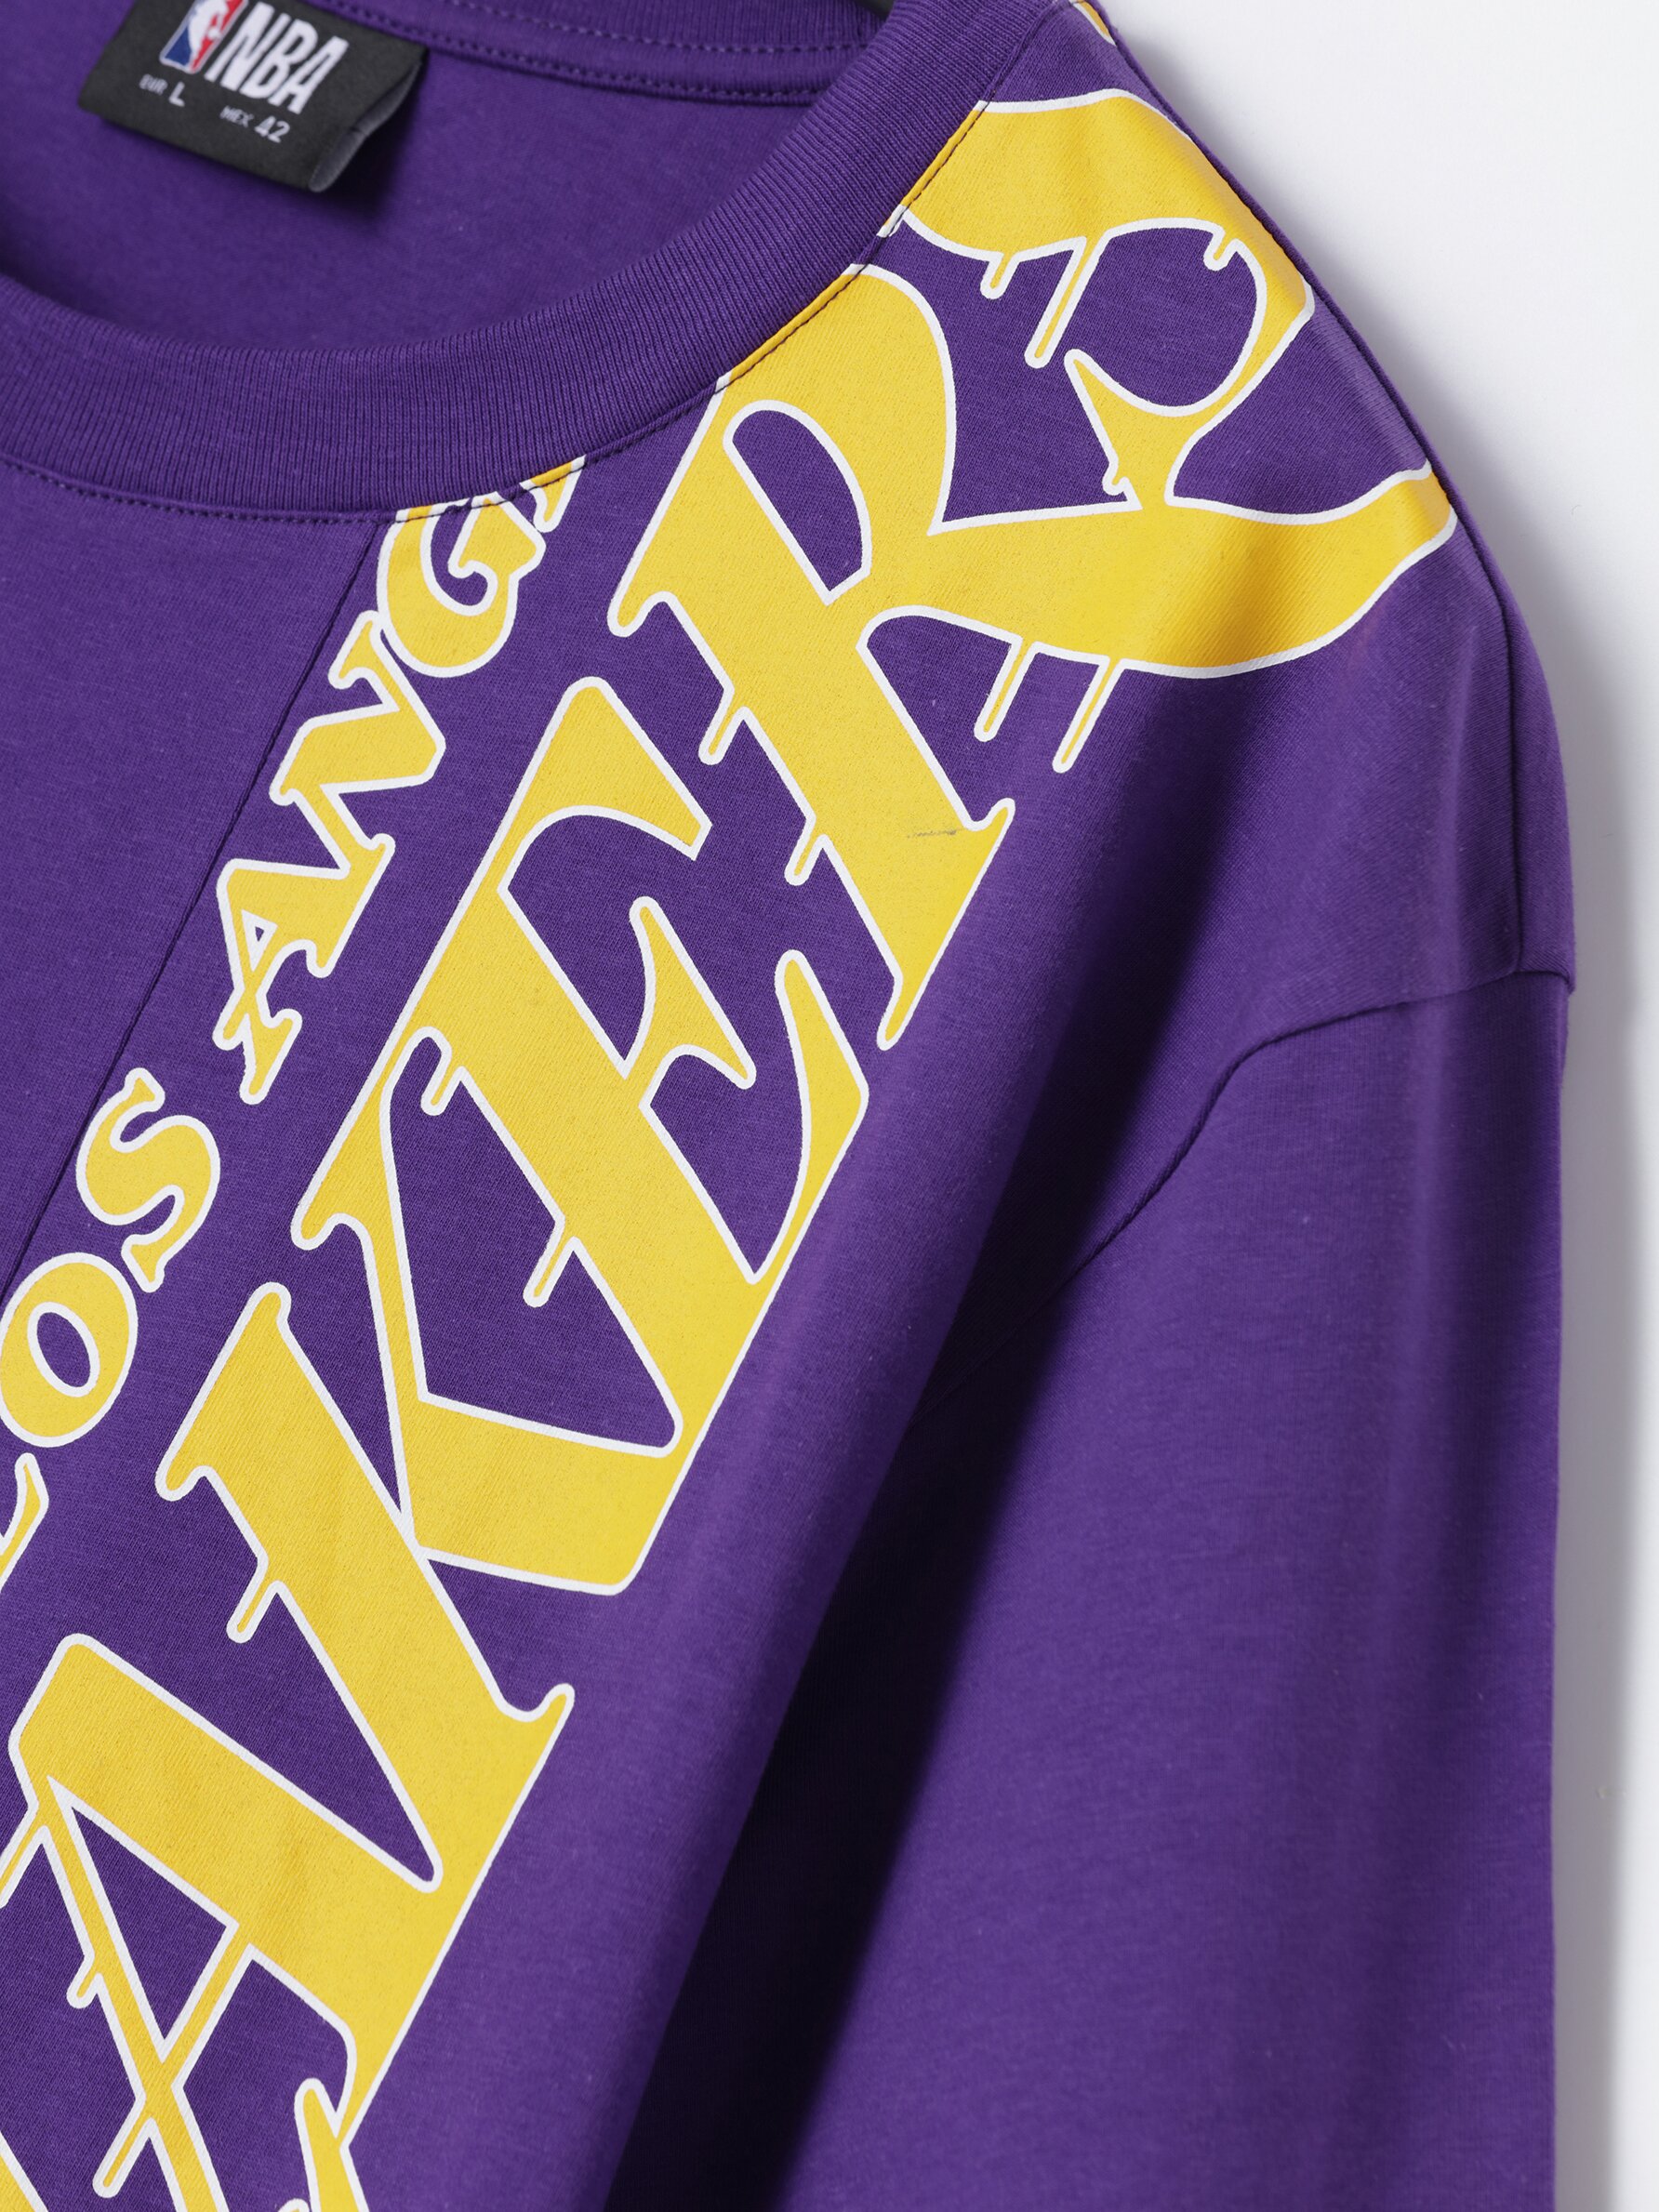 Los Angeles Lakers NBA colour block T-shirt - NBA - Collabs